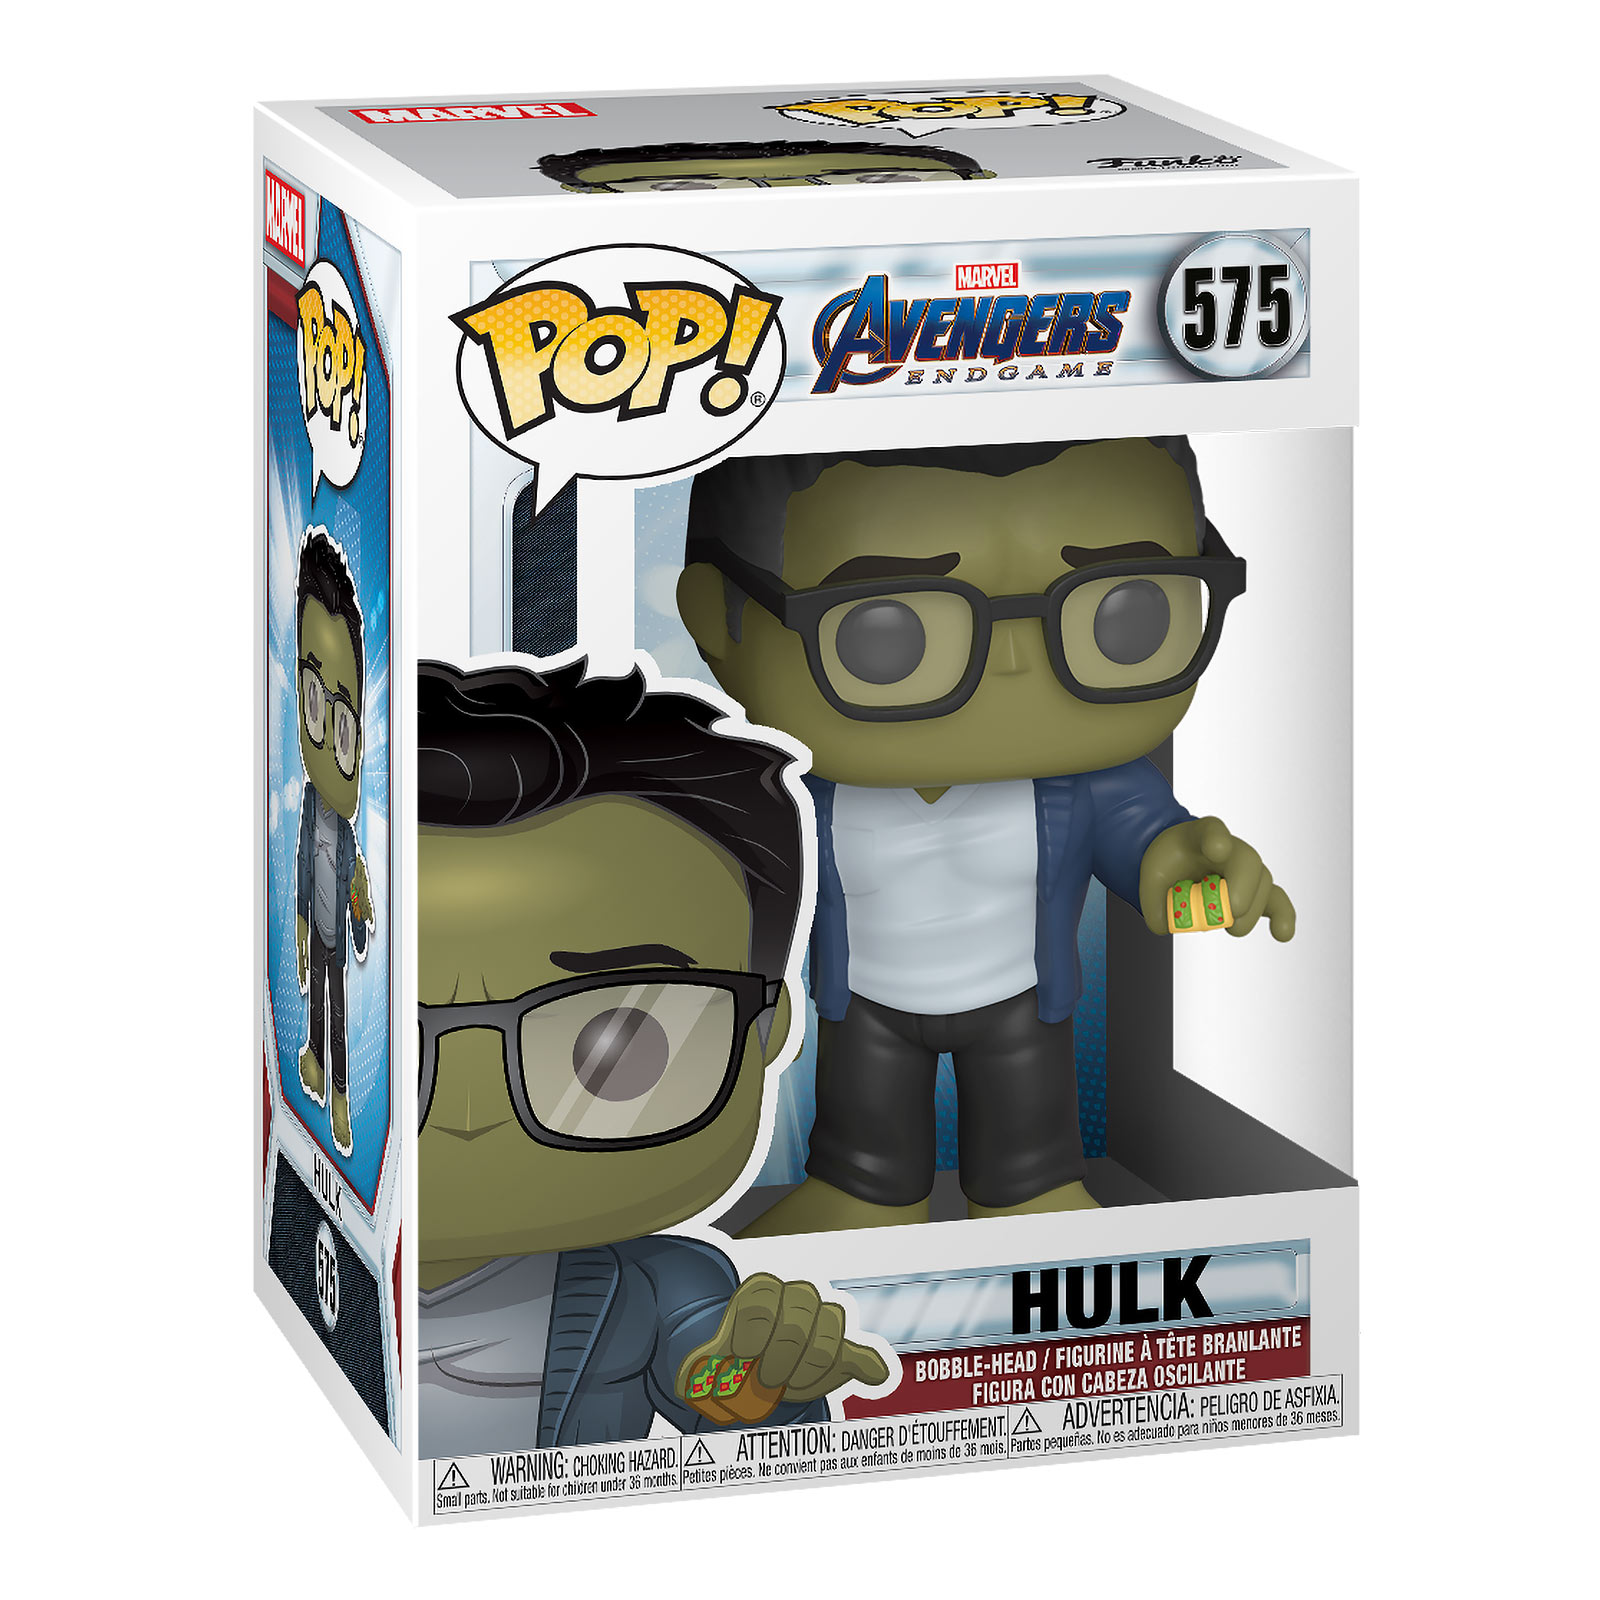 Avengers - Hulk with Taco Endgame Funko Pop bobblehead figure